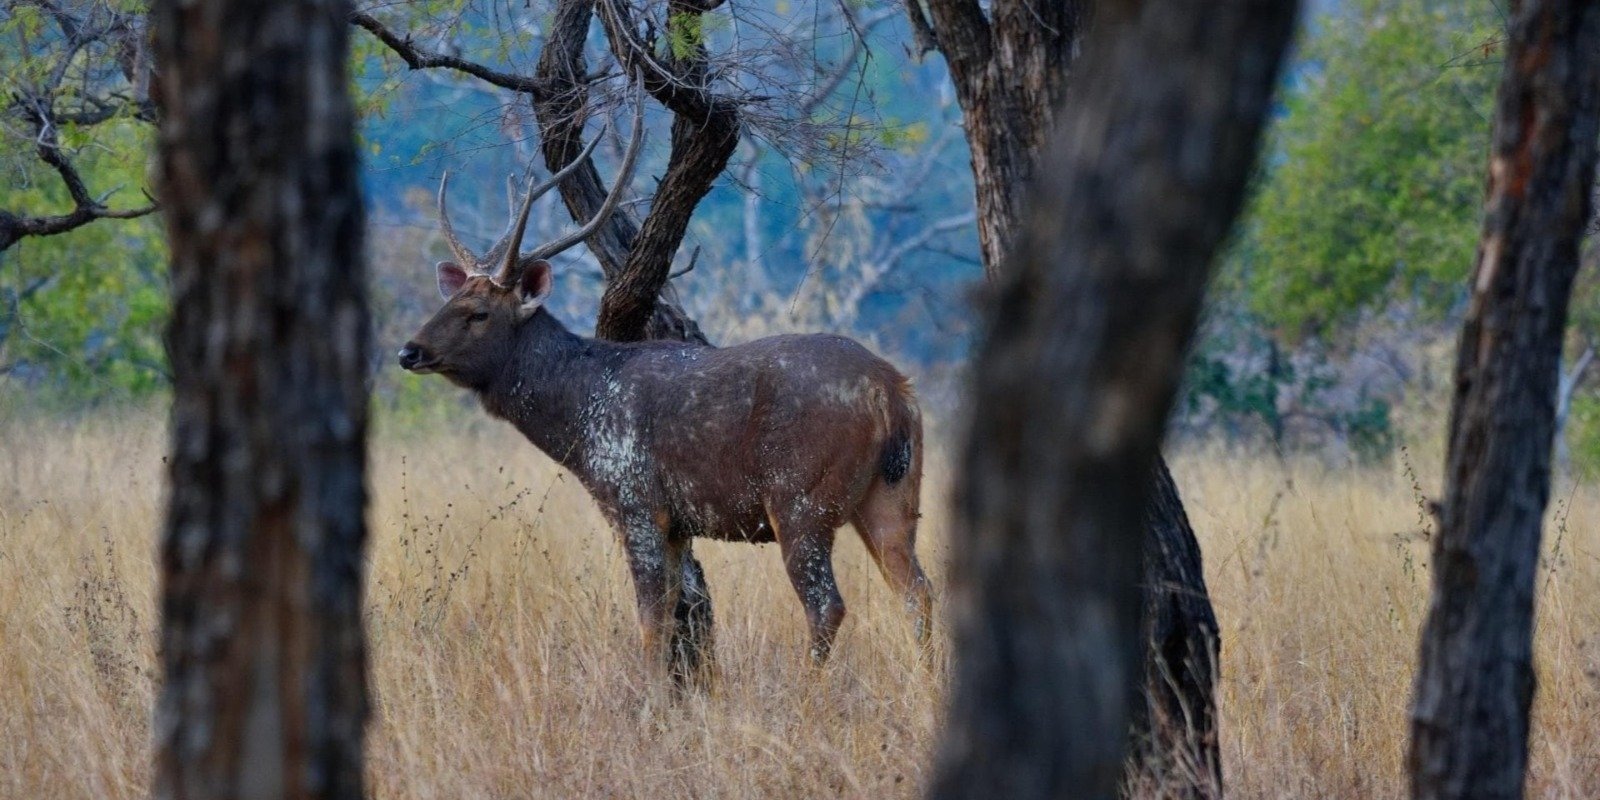 Incredible Wildlife Safari in Heart of Central India